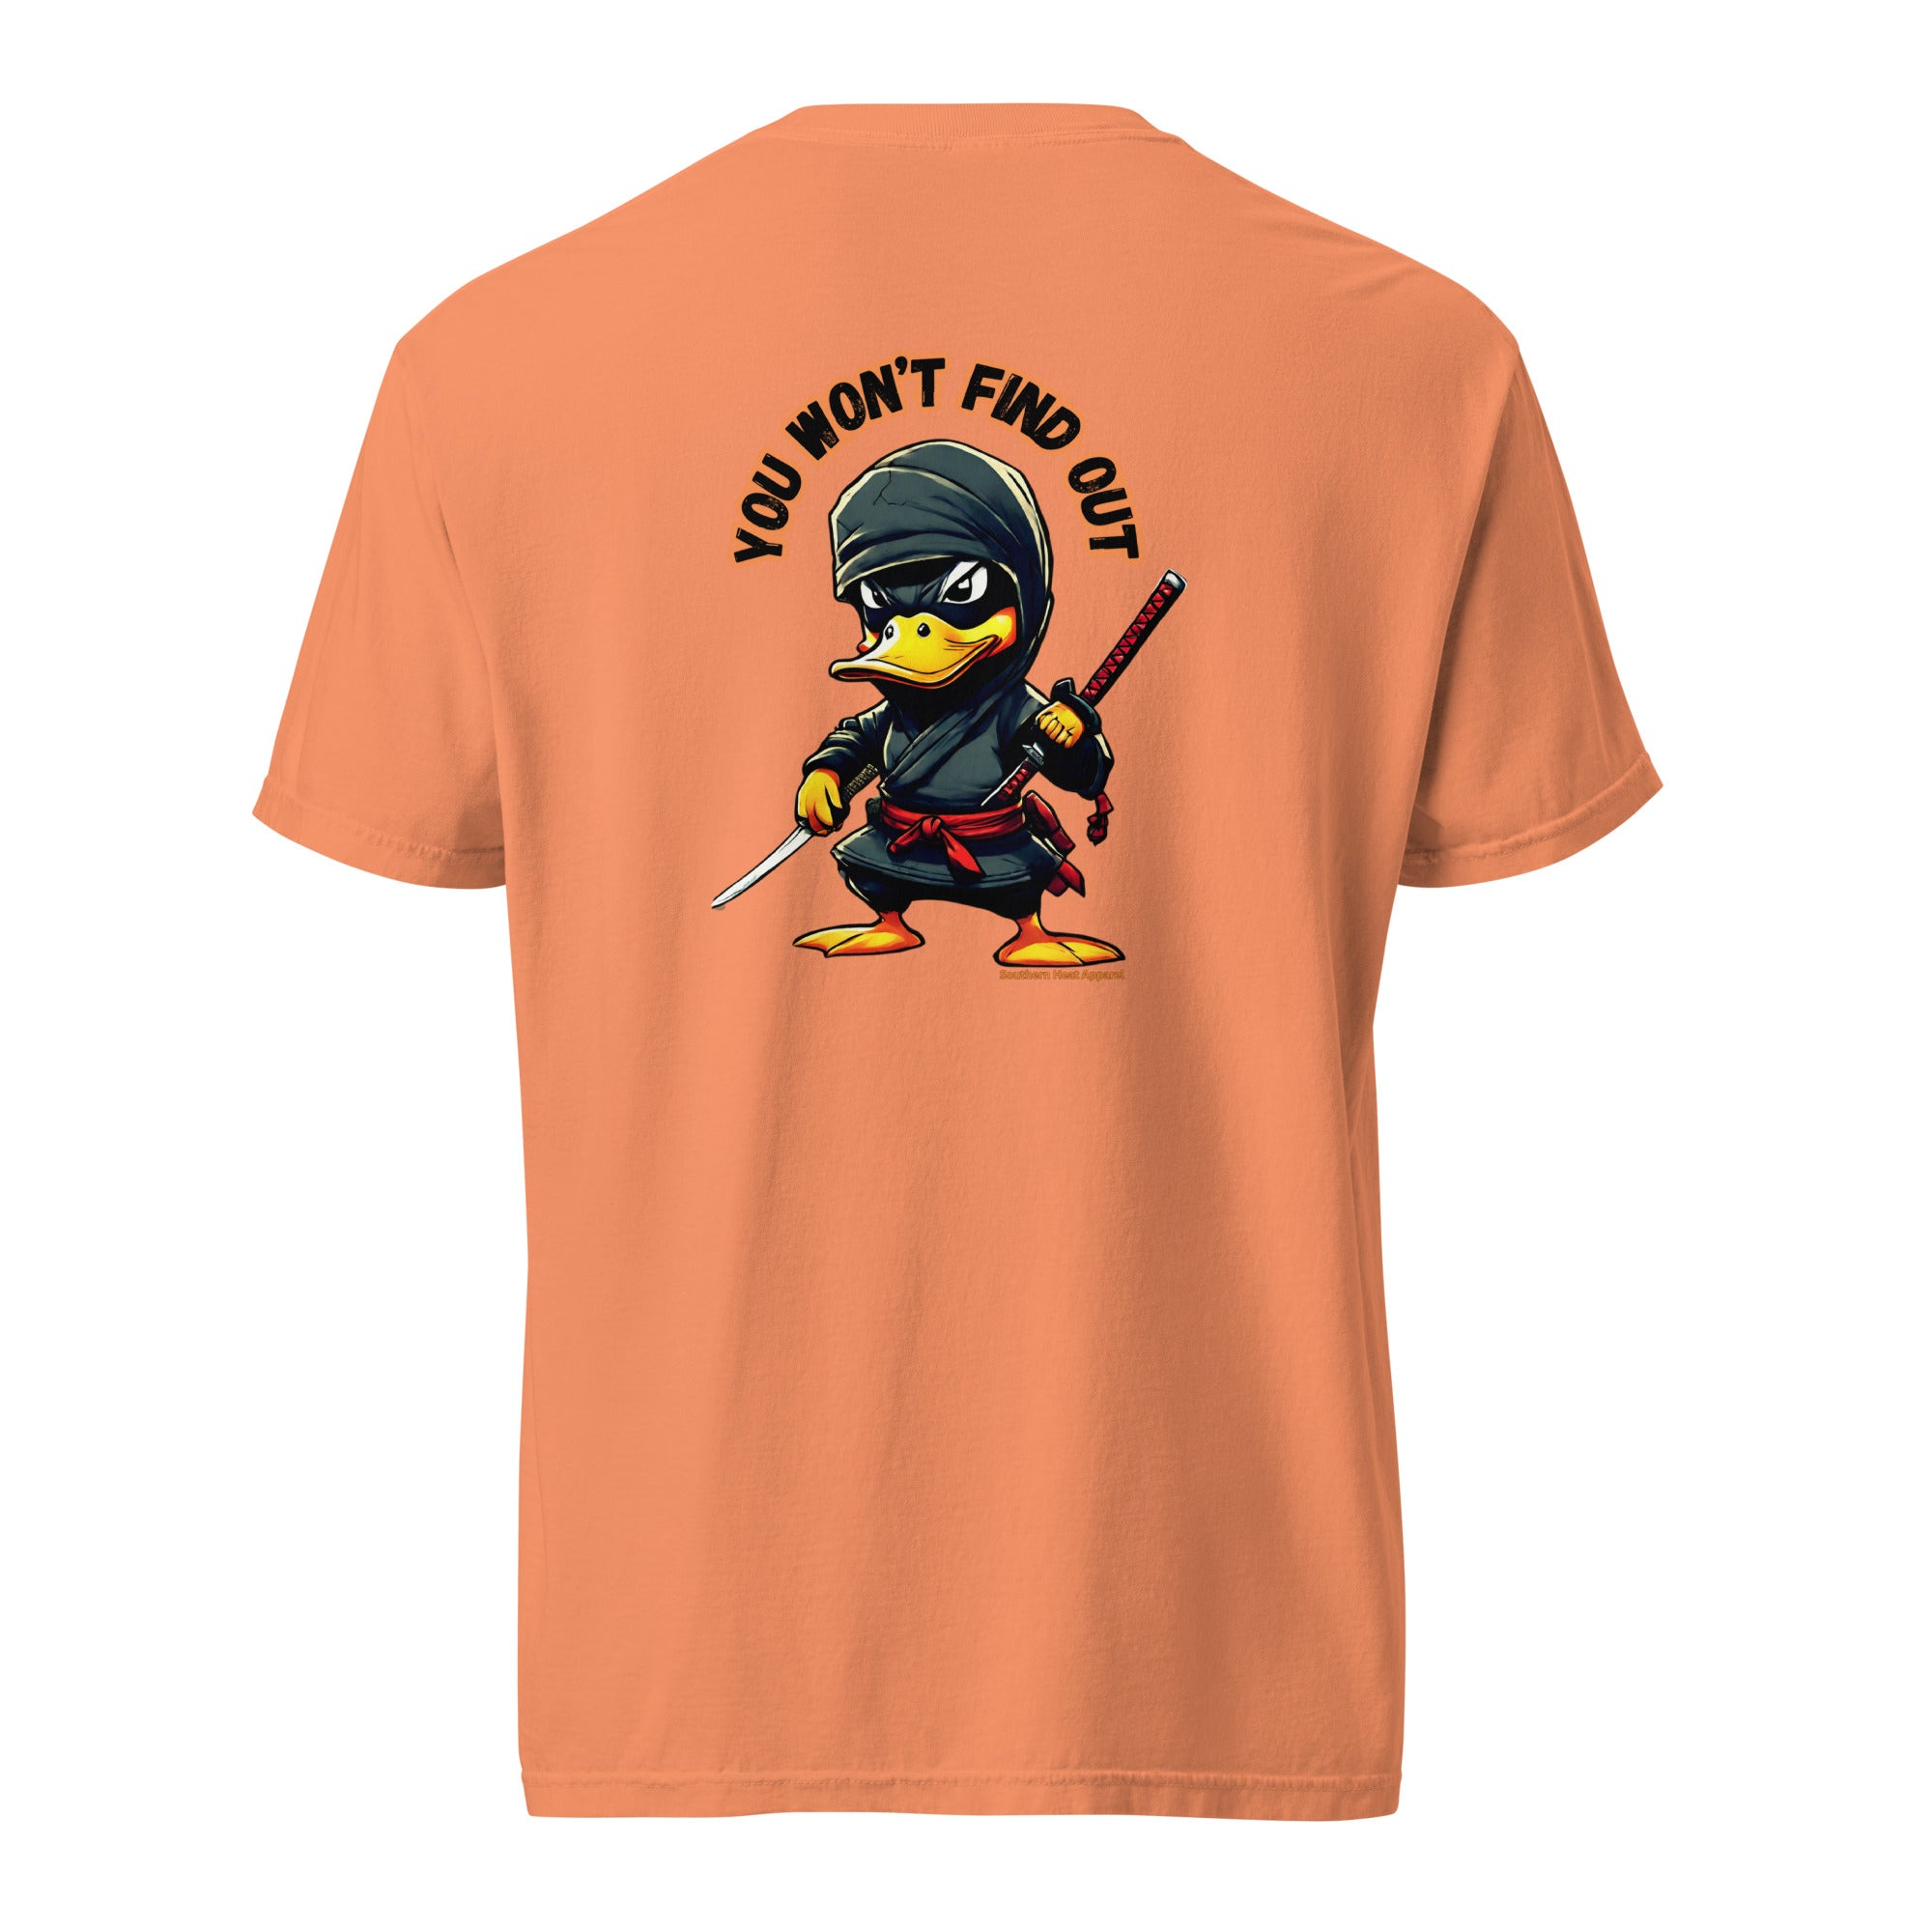 Don't duck around-Mens garment-dyed heavyweight t-shirt